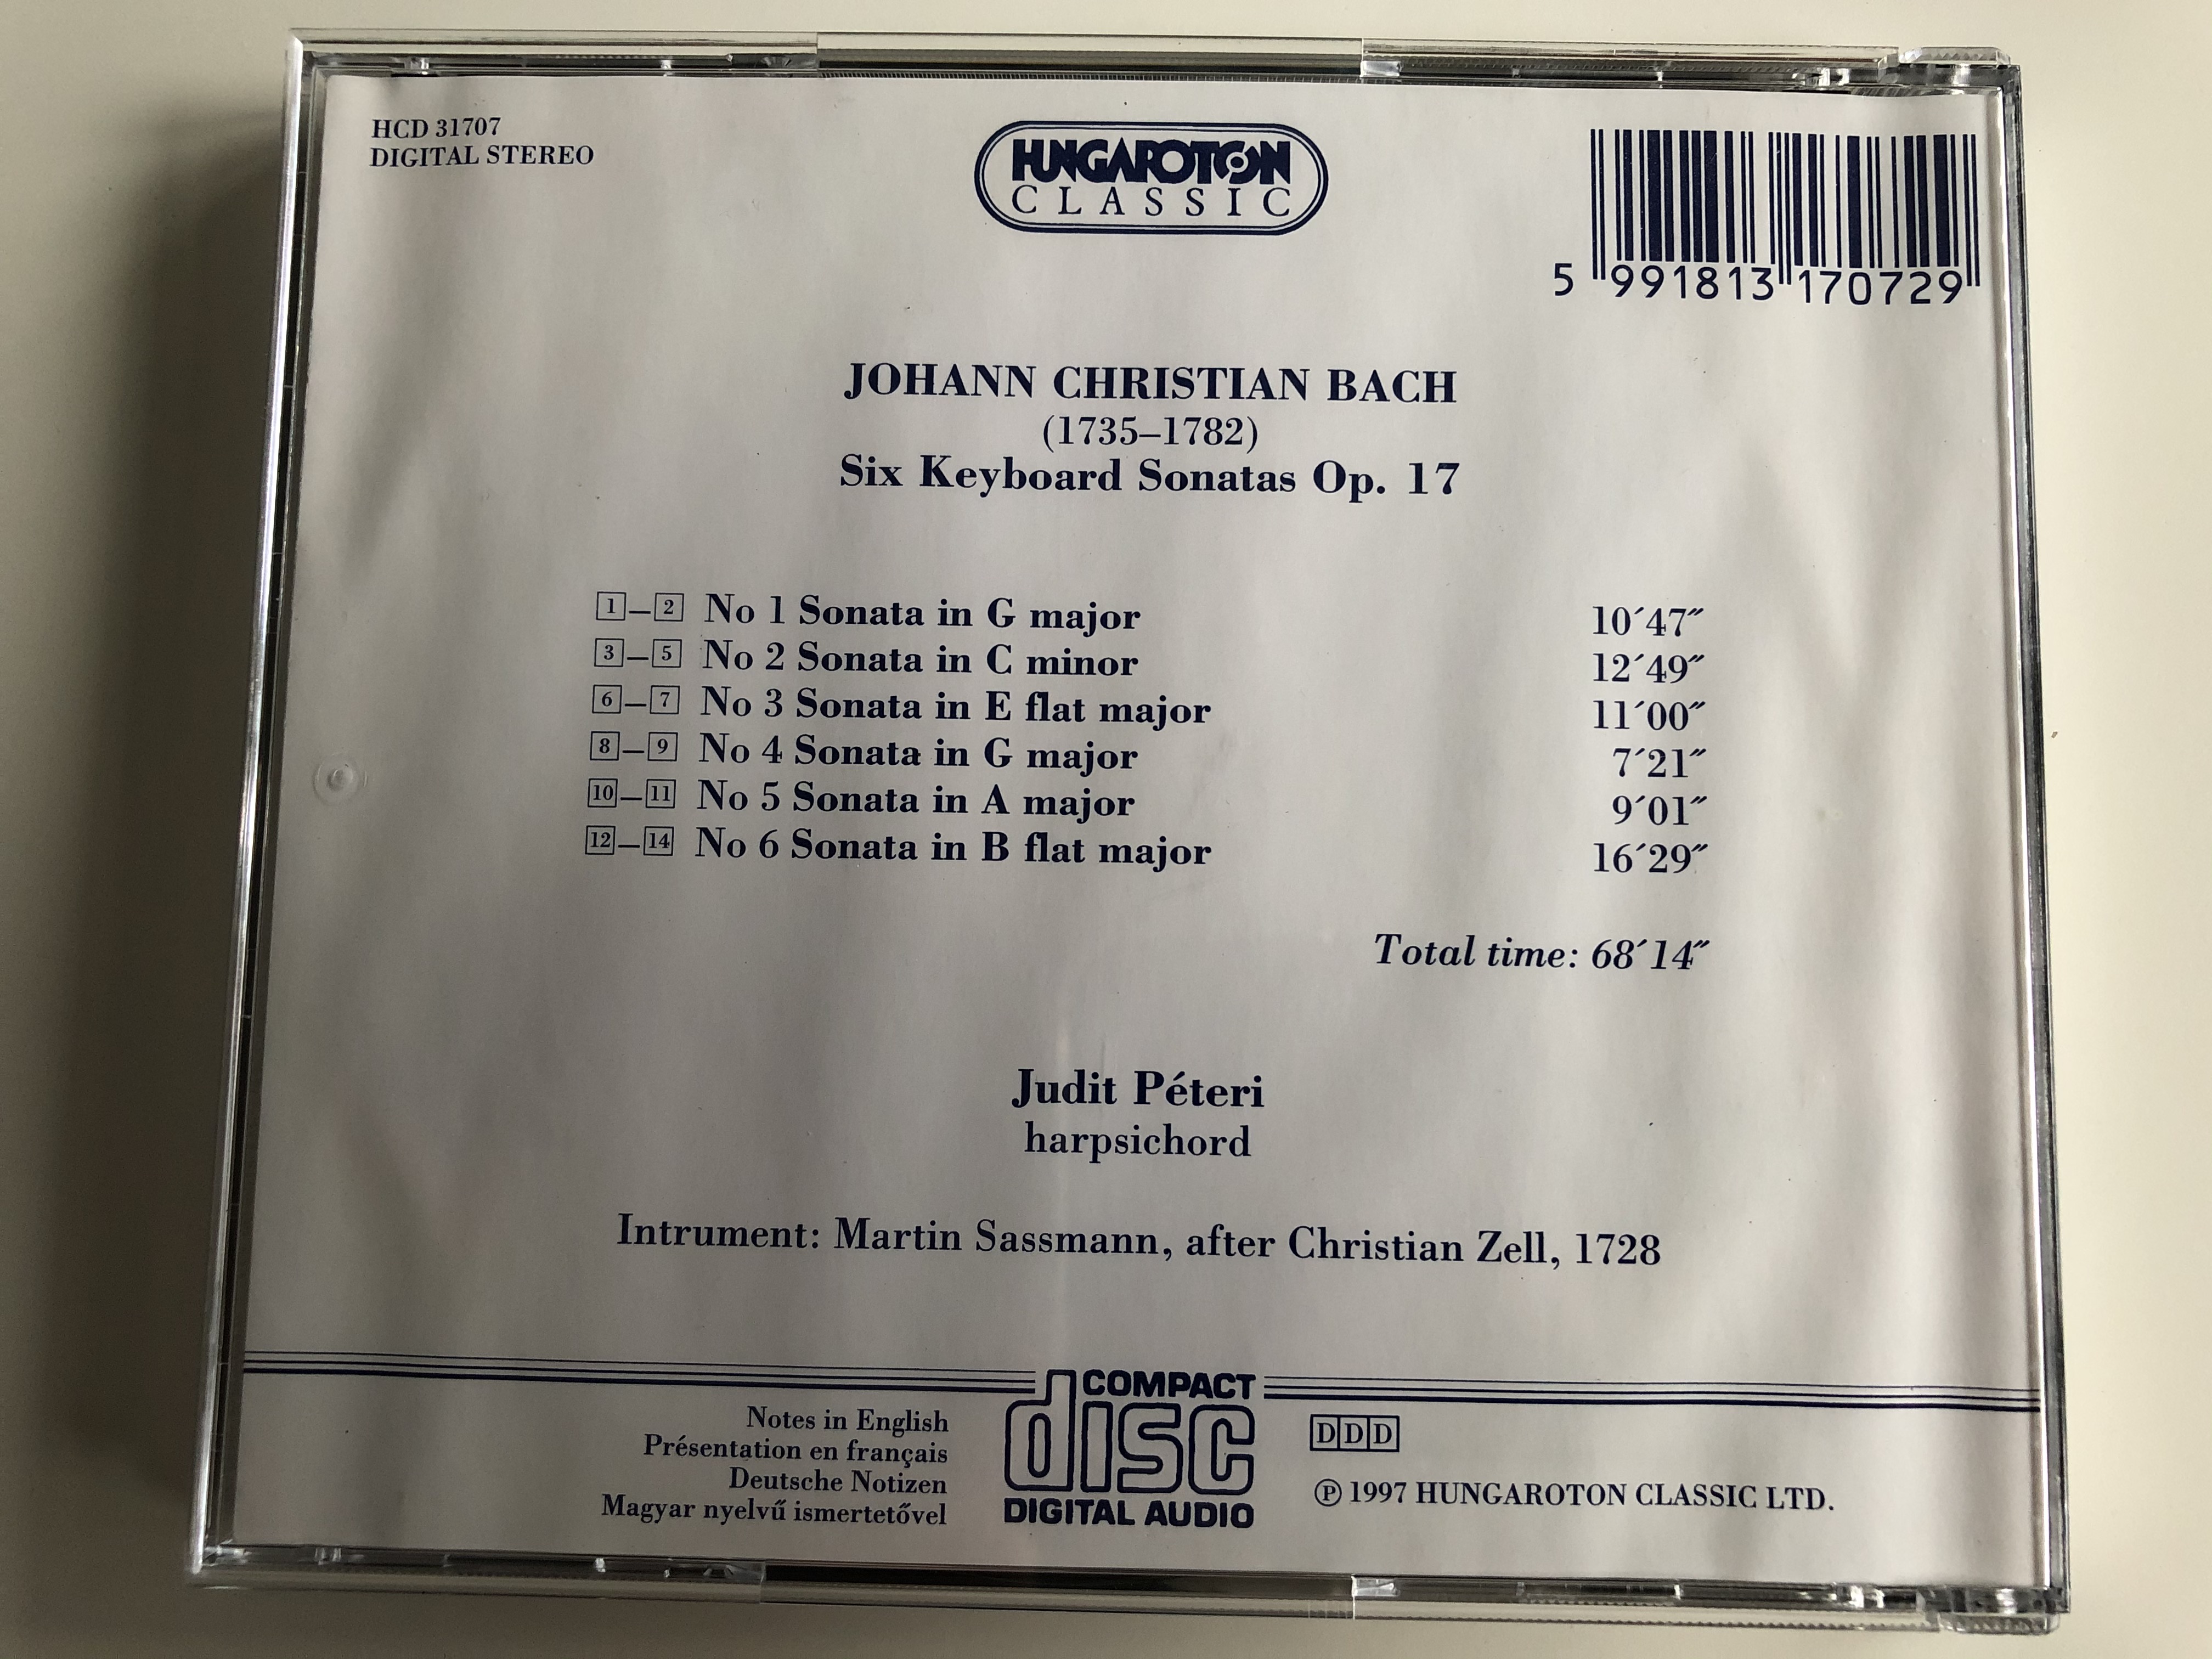 johann-christian-bach-six-keyboard-sonatas-op.17-judit-p-teri-harpsichord-hungaroton-classic-audio-cd-1997-stereo-hcd-31707-8-.jpg